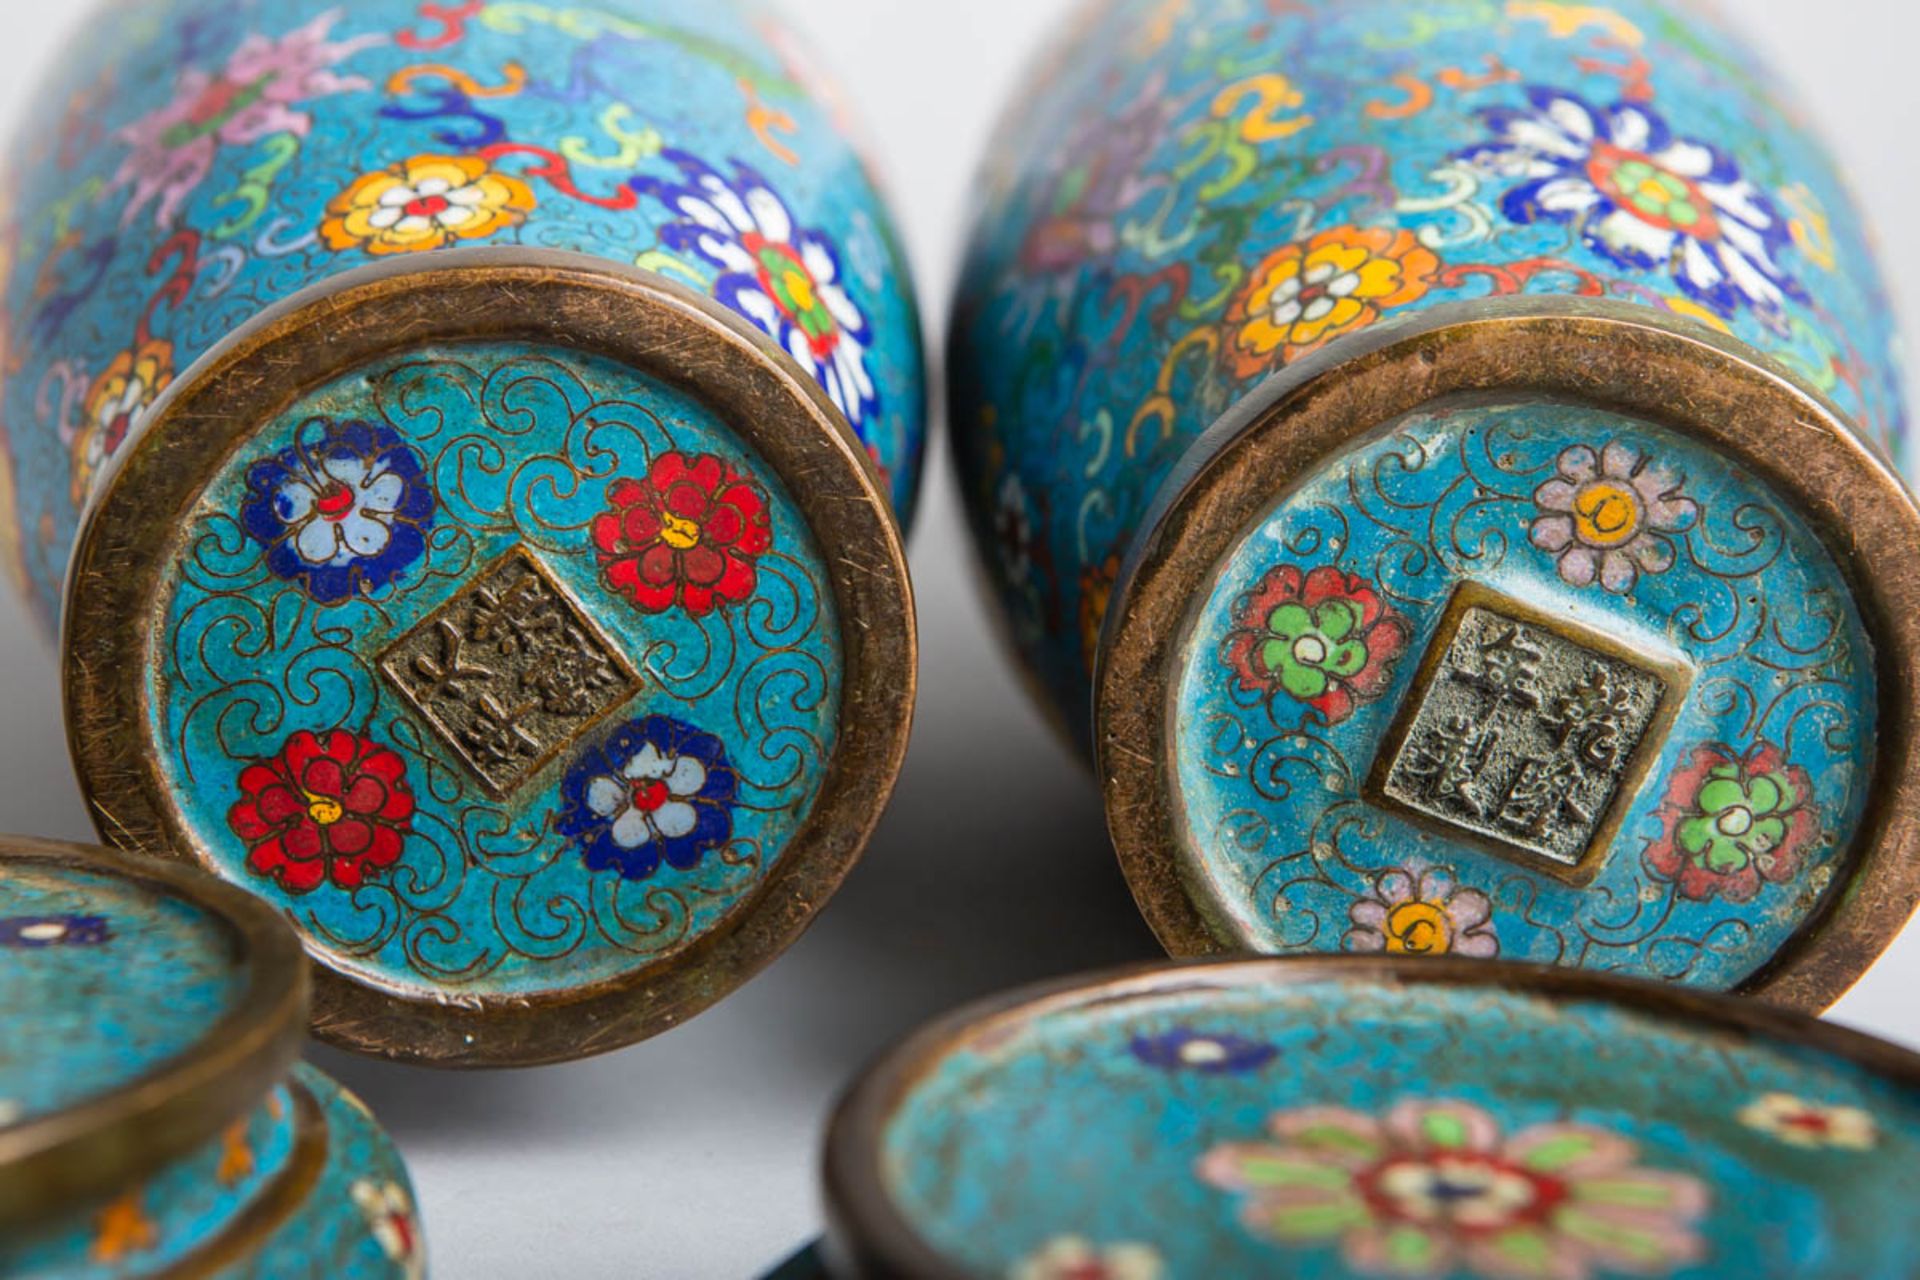 2-teiliges Set von Cloisonné-Vasen m. passenden Sockeln (China, Qing-Dynastie, wohl 16./17. Jh.) - Image 4 of 4